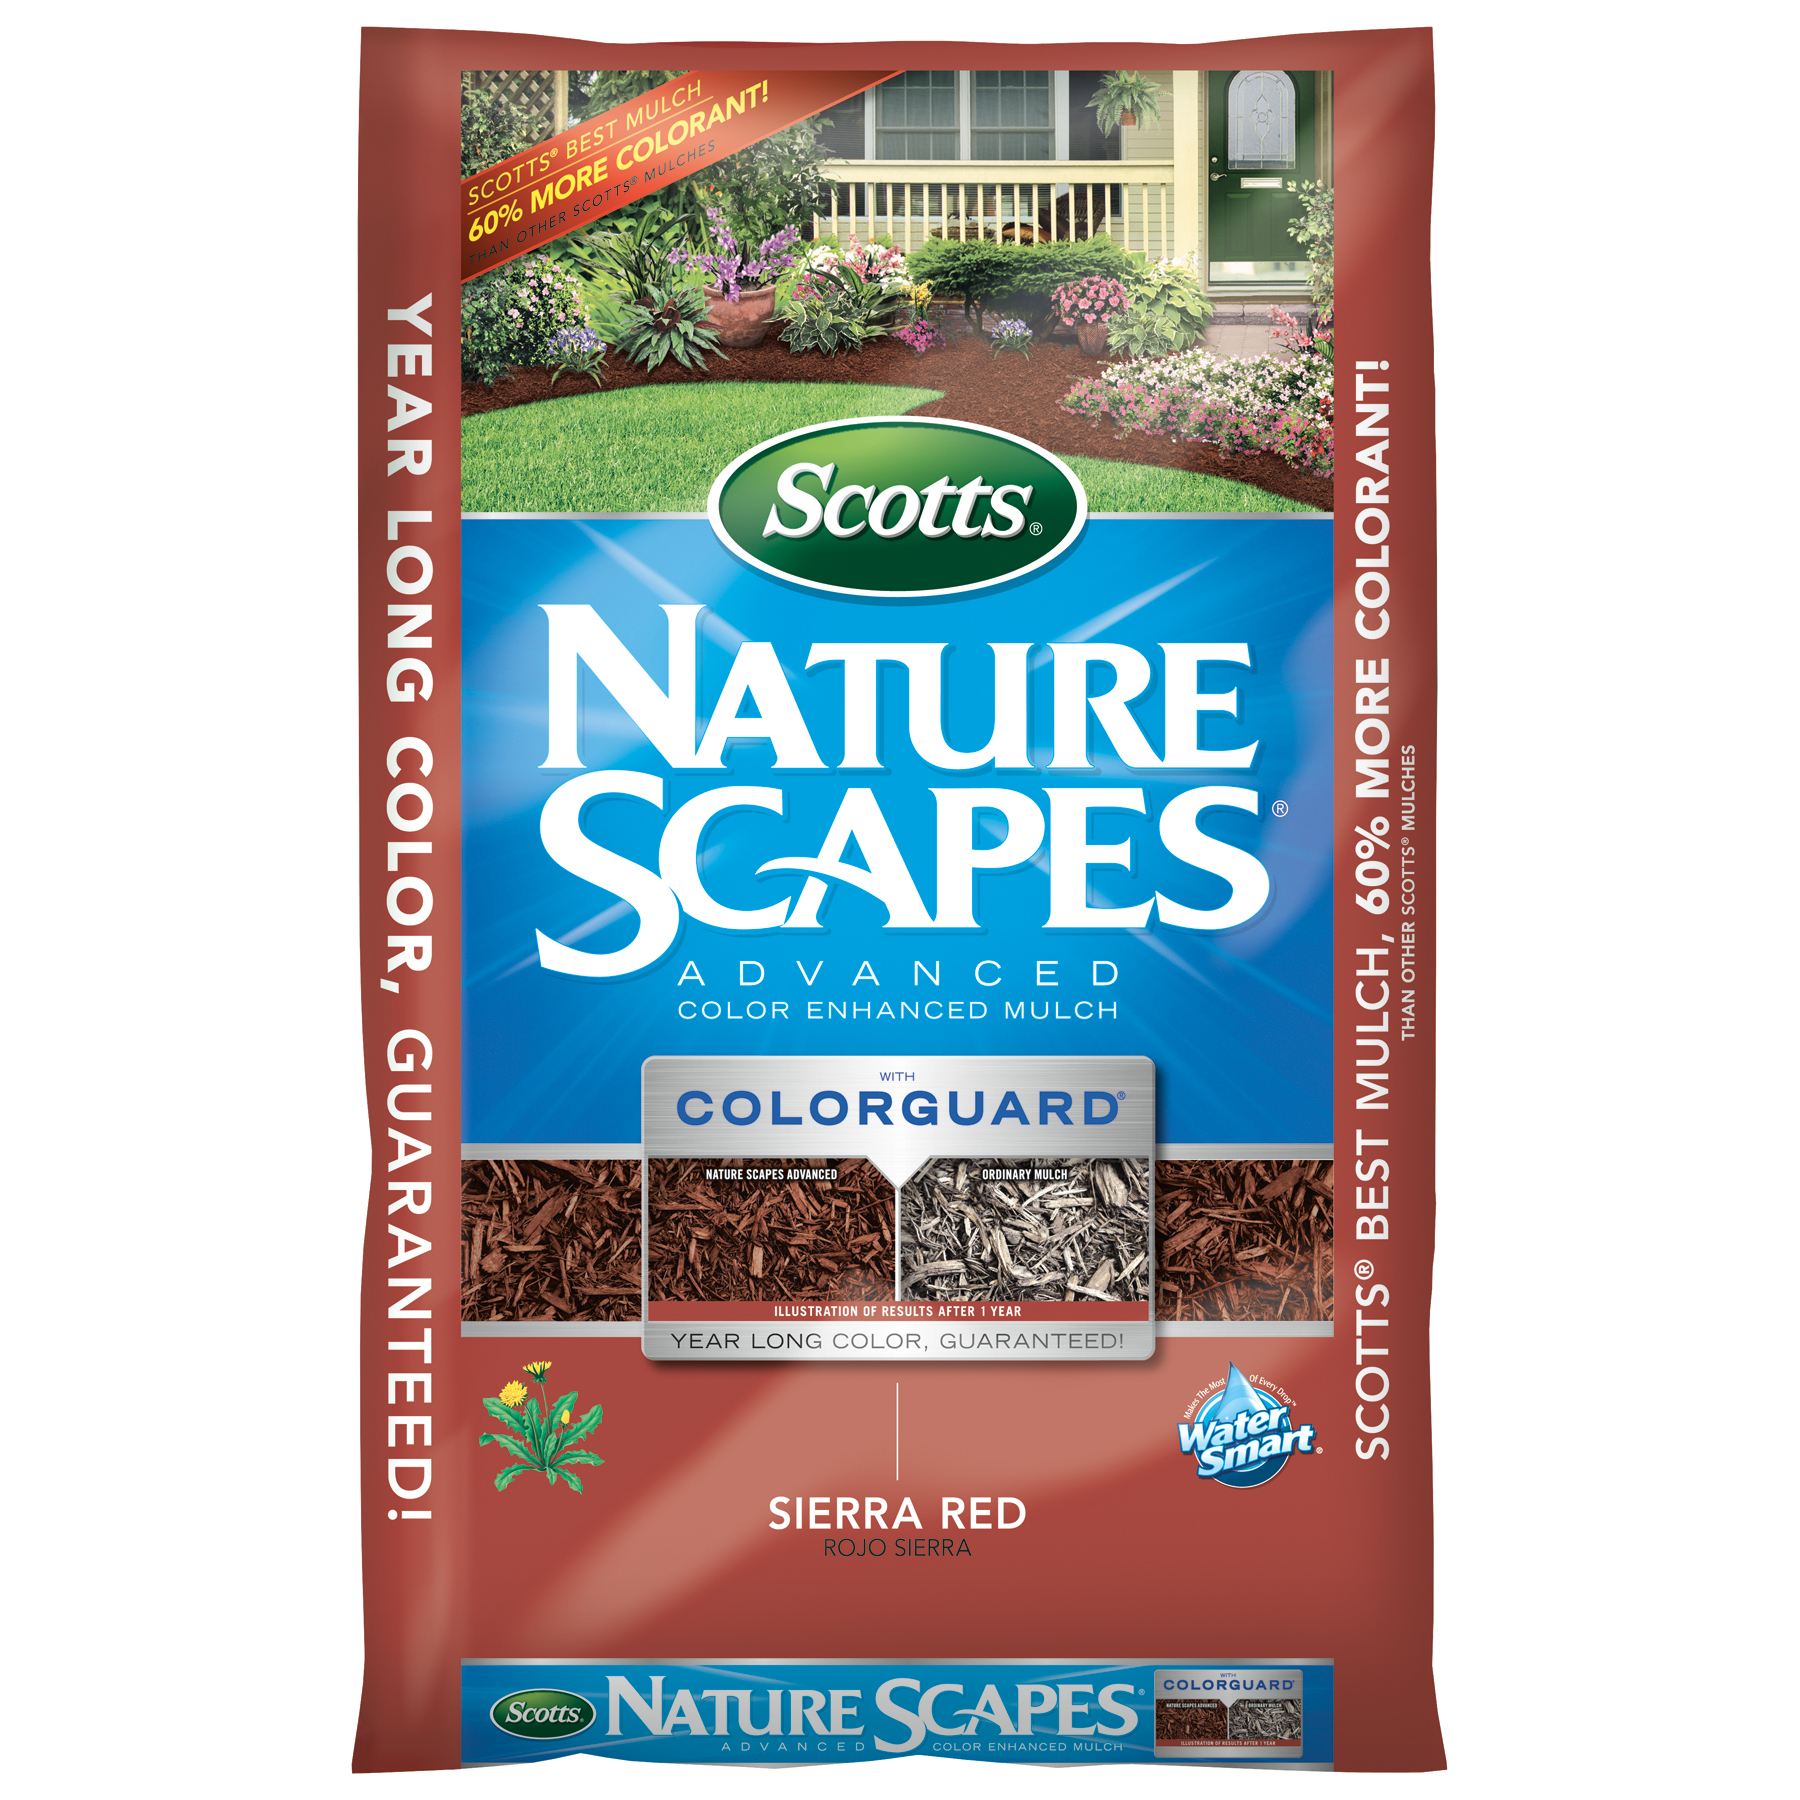 scotts-2-cu-ft-nature-scapes-advanced-color-enhanced-mulch-sierra